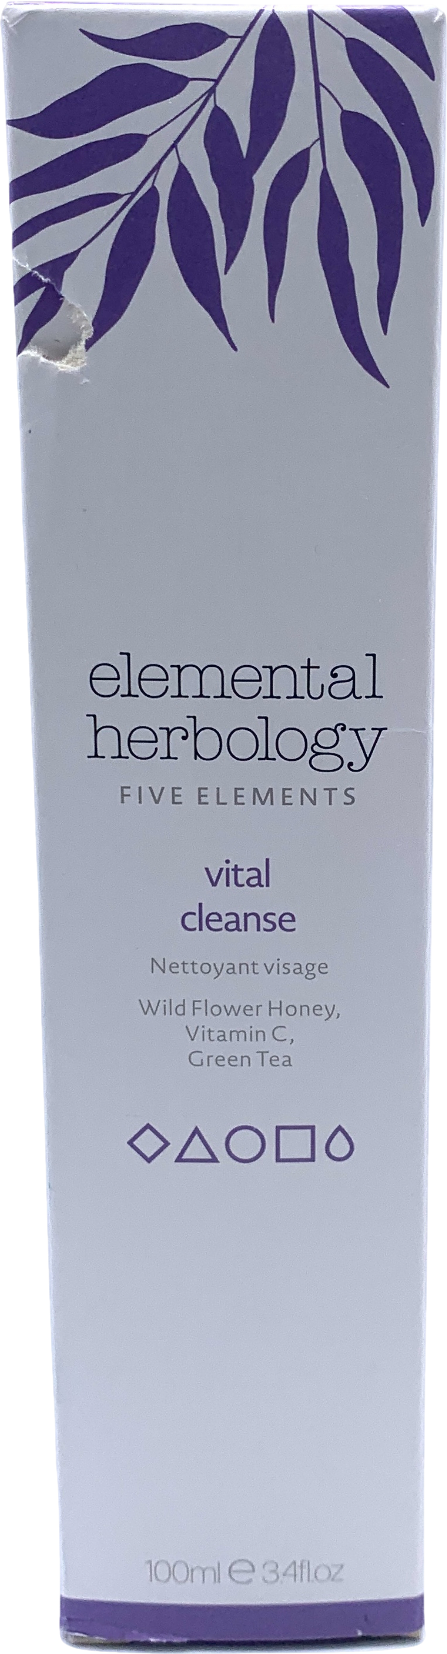 elemental herbology Vital Cleanse Facial Cleanser 100ml